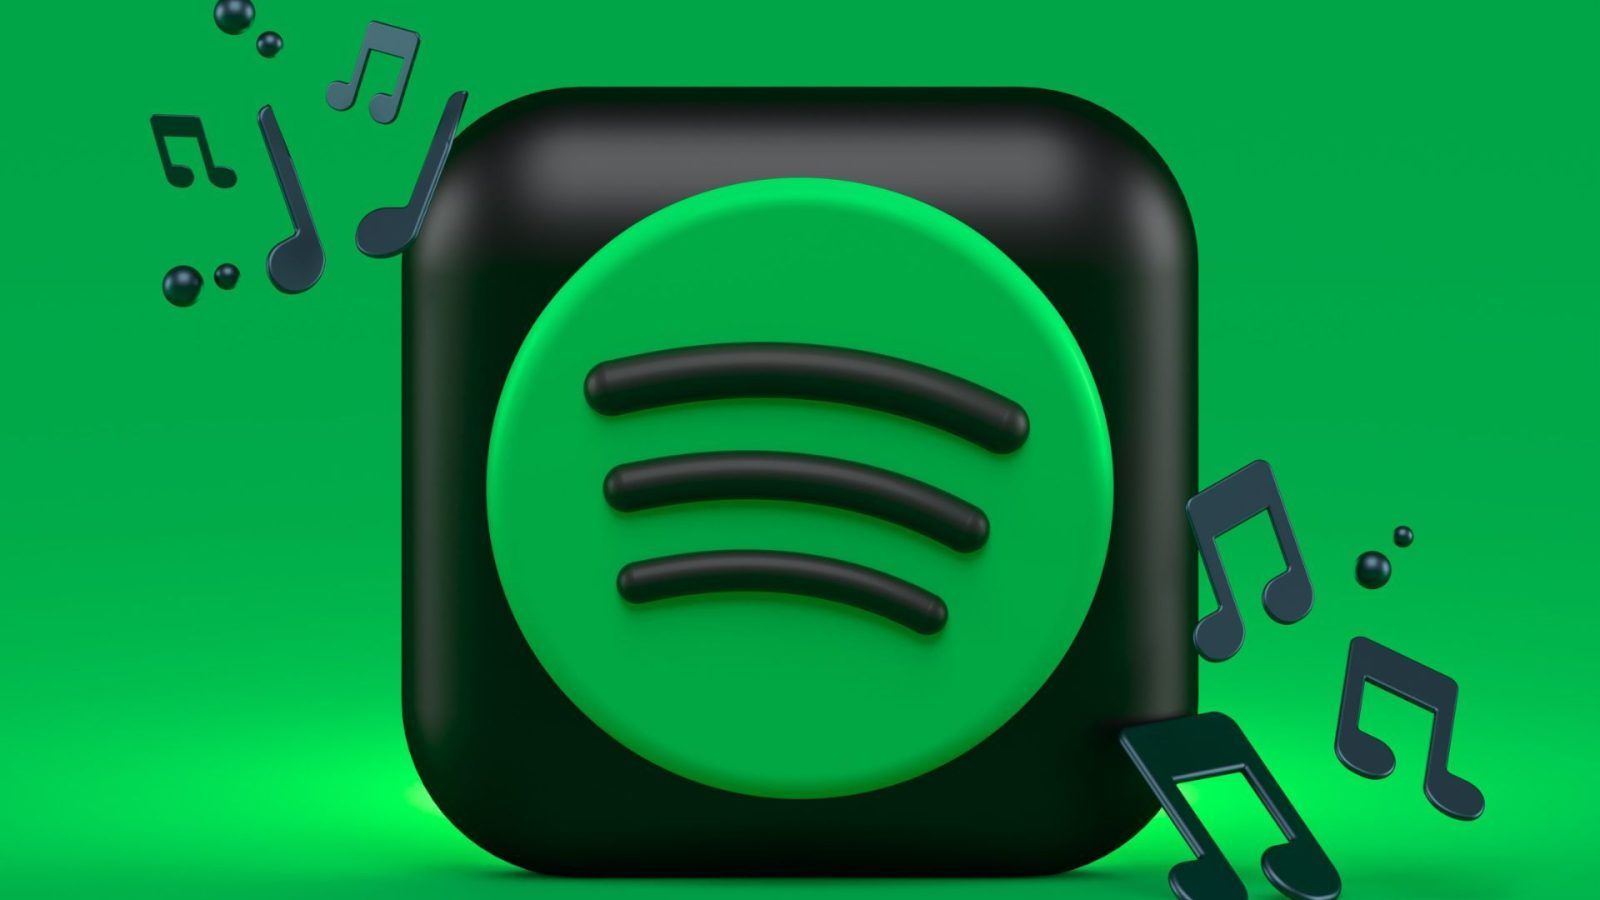 Spotify - Social media & Logos Icons